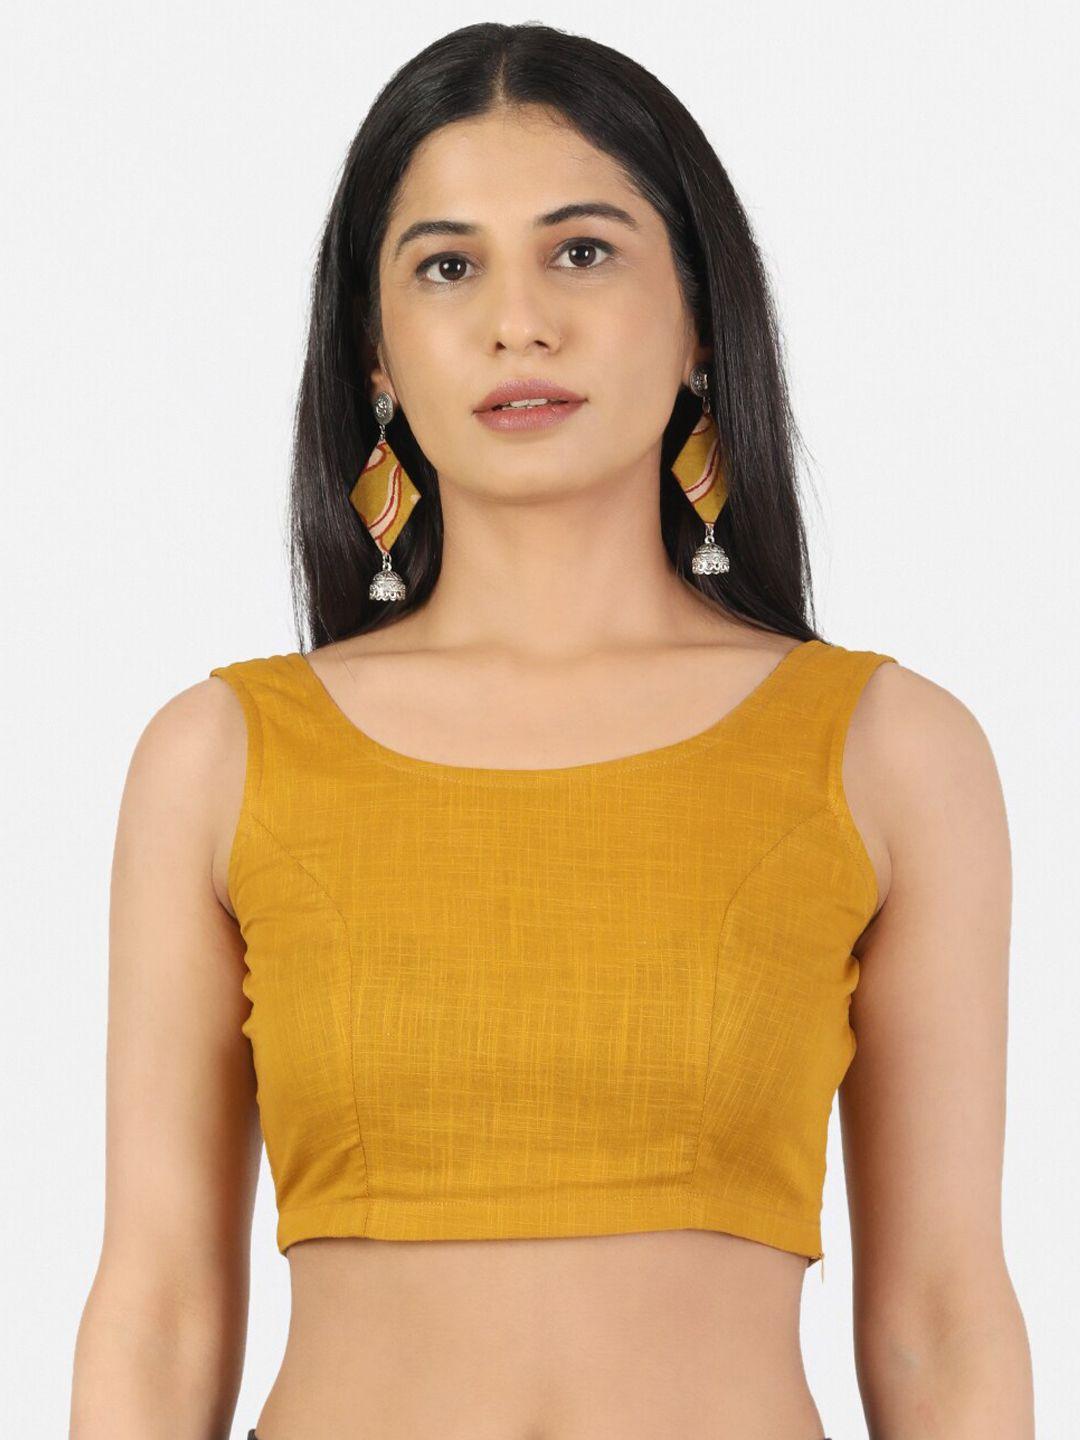 llajja mustard yellow solid pure cotton saree blouse